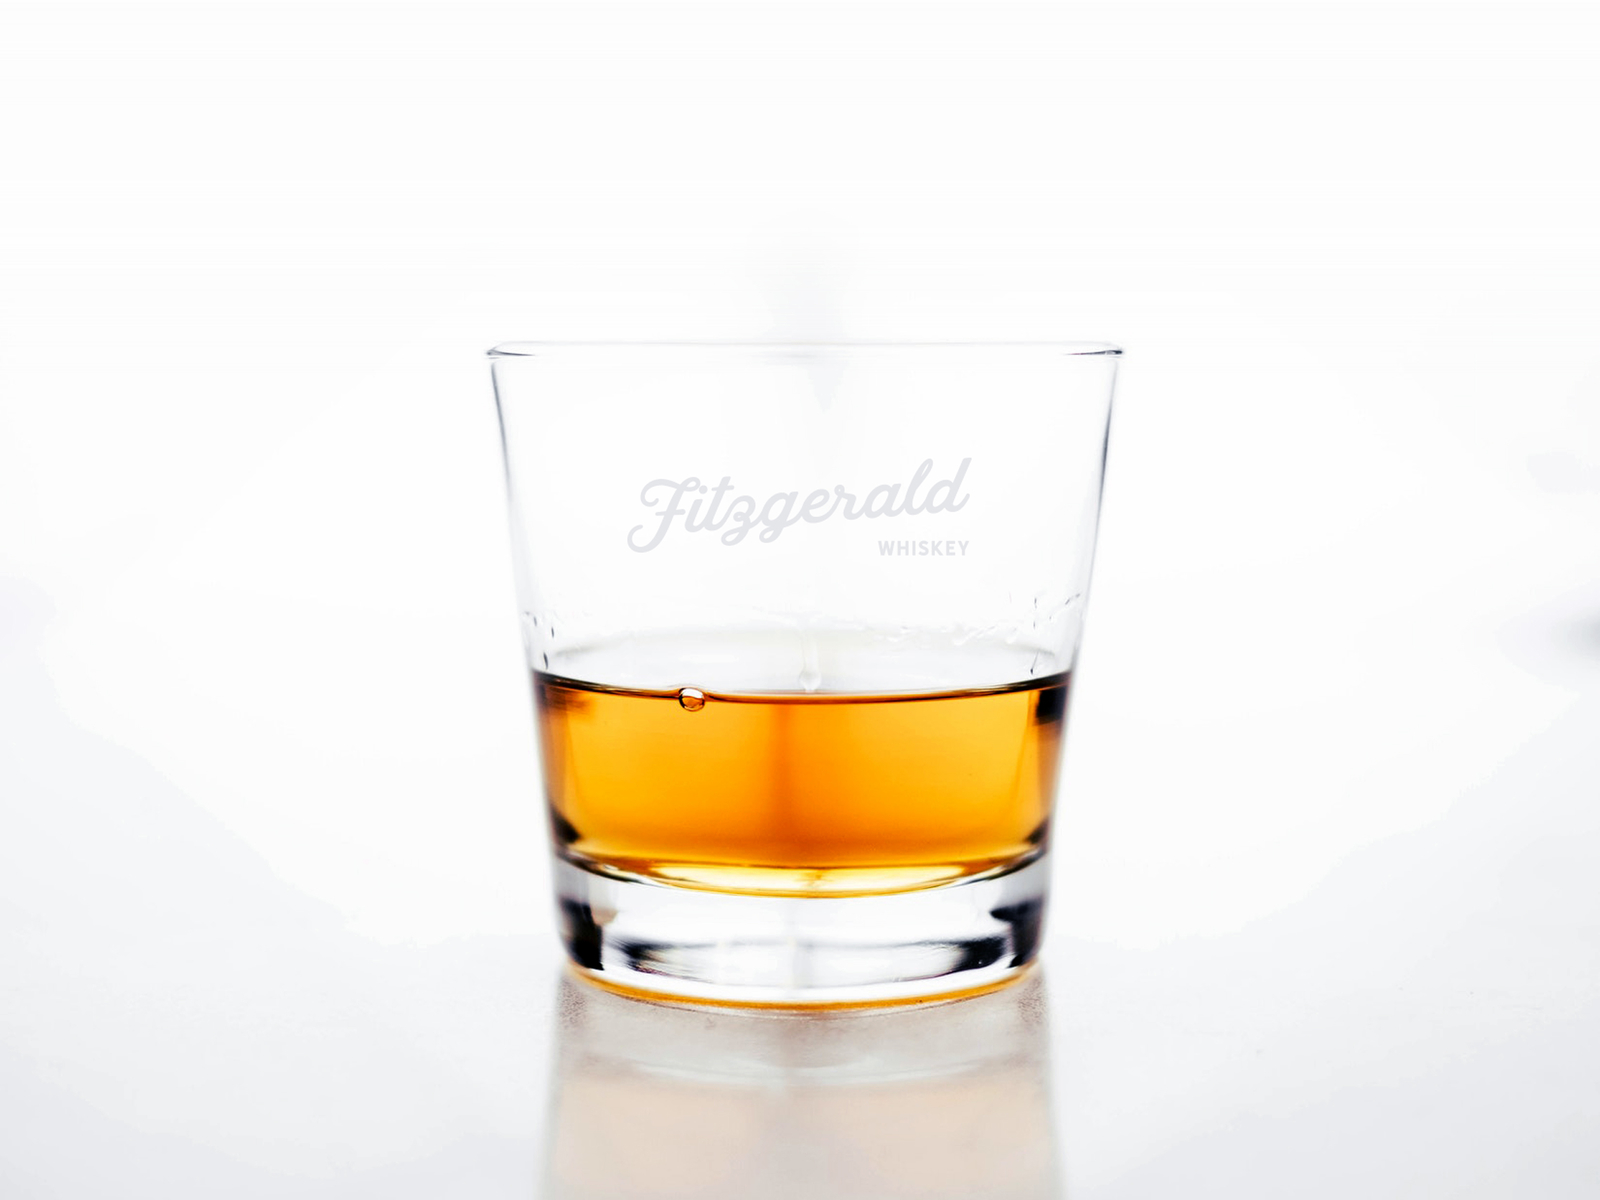 Fitzgerald Whiskey Glassware by Brett Lair on Dribbble